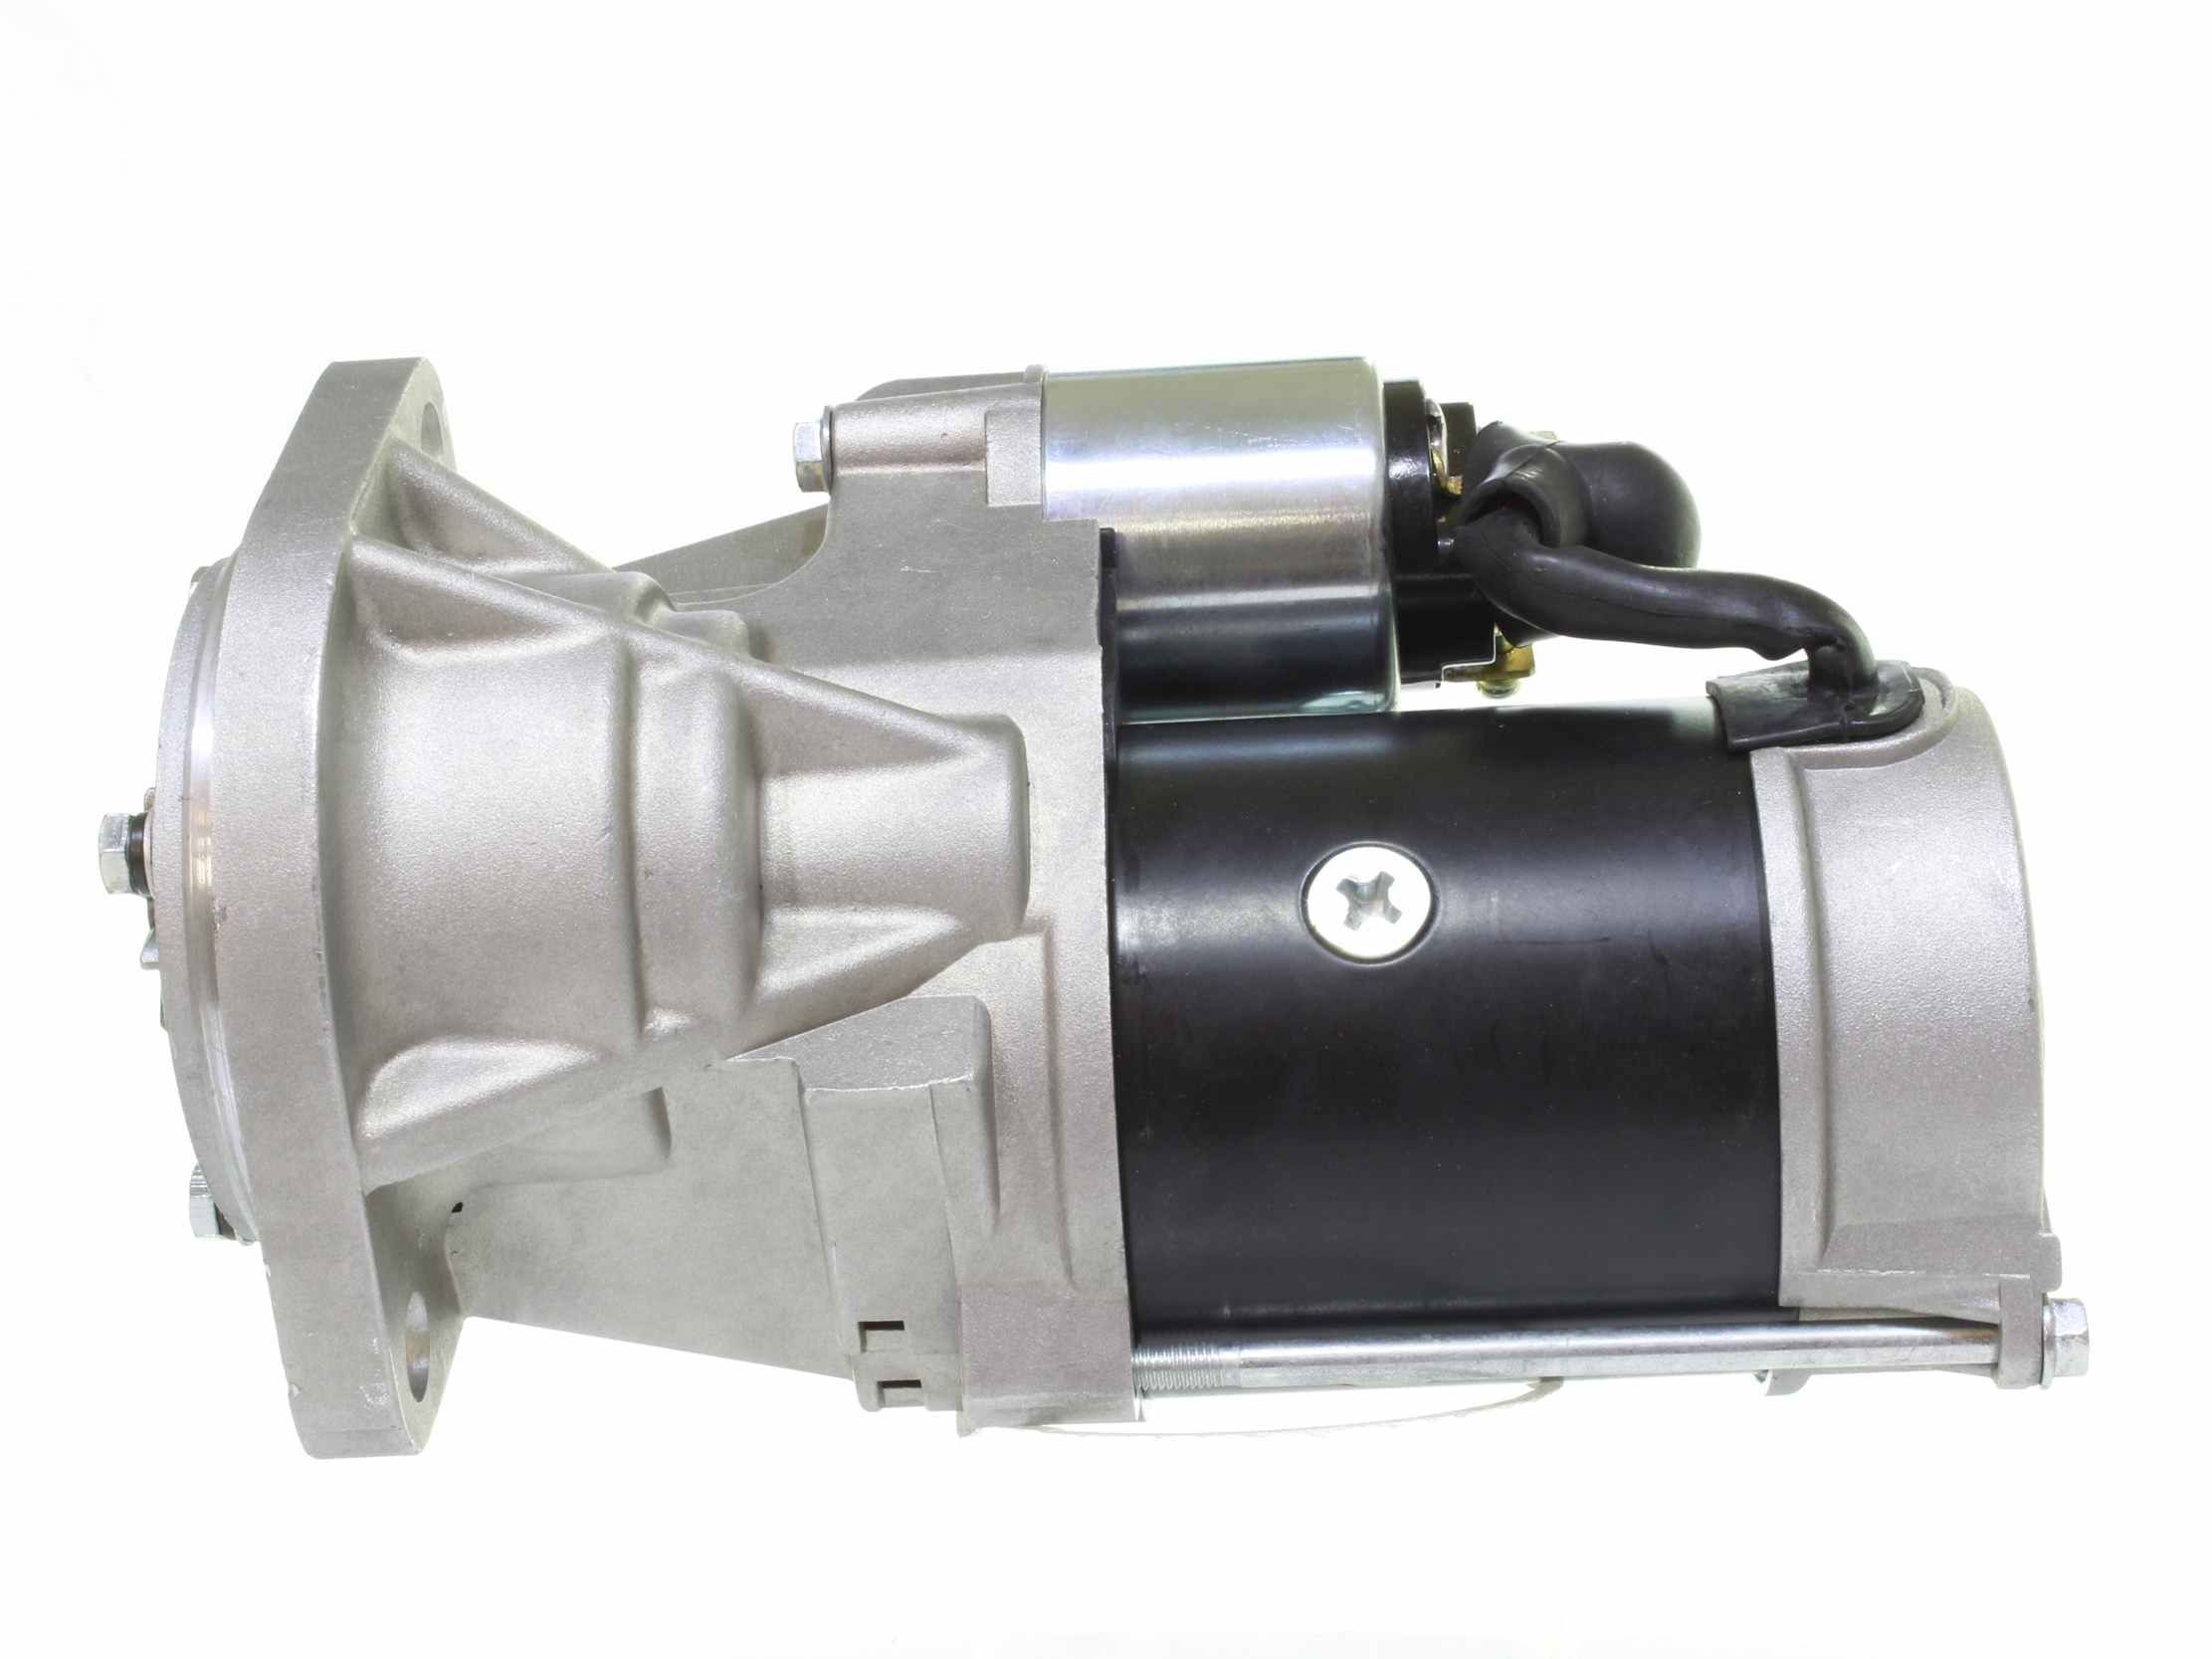 10439648 Engine starter motor ALANKO STR72120 review and test